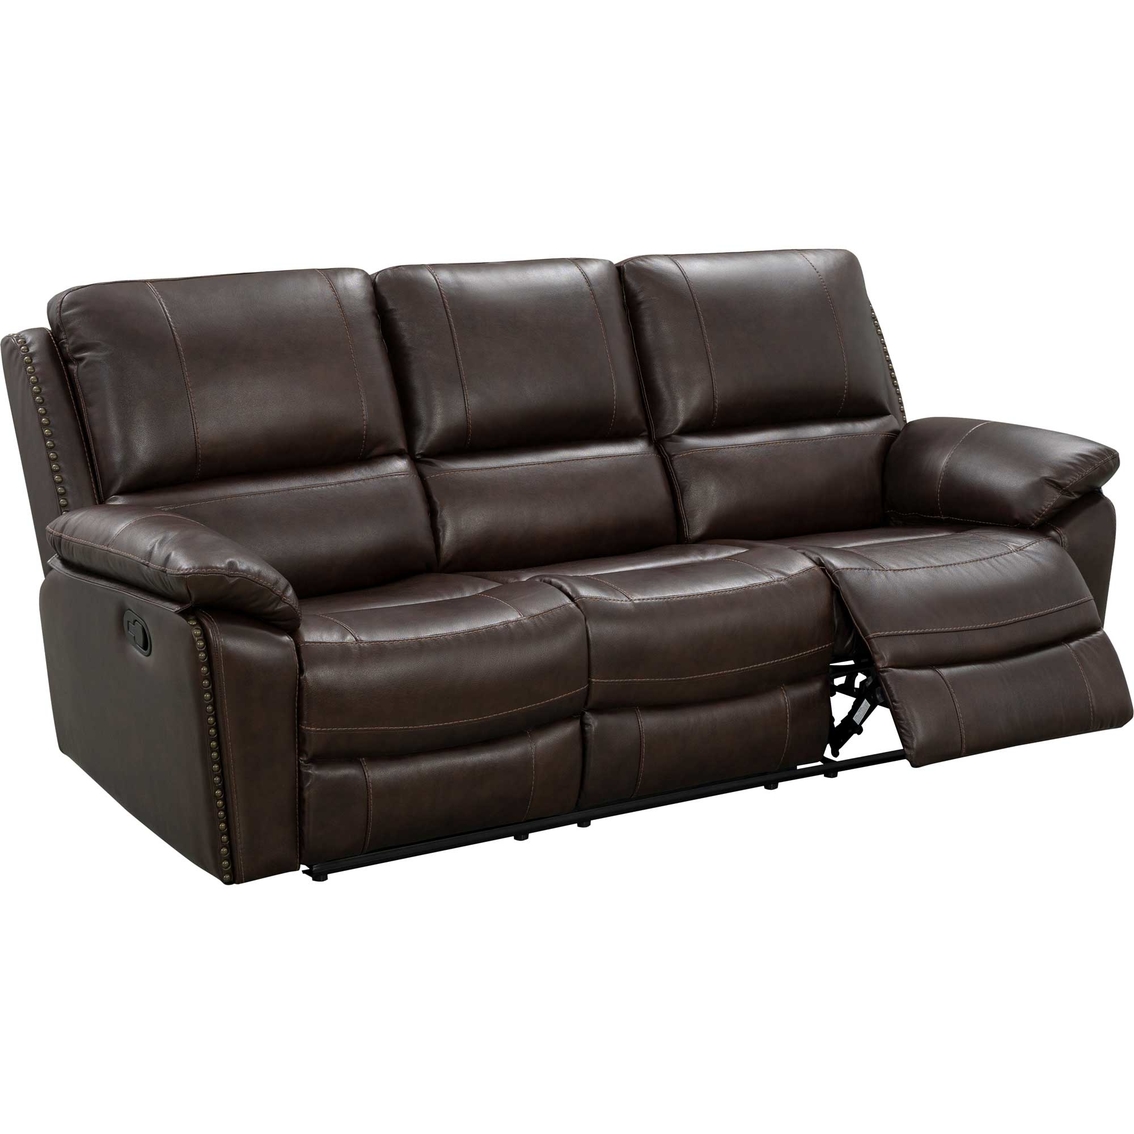 Abbyson Sorento Leather Reclining Sofa - Image 3 of 7